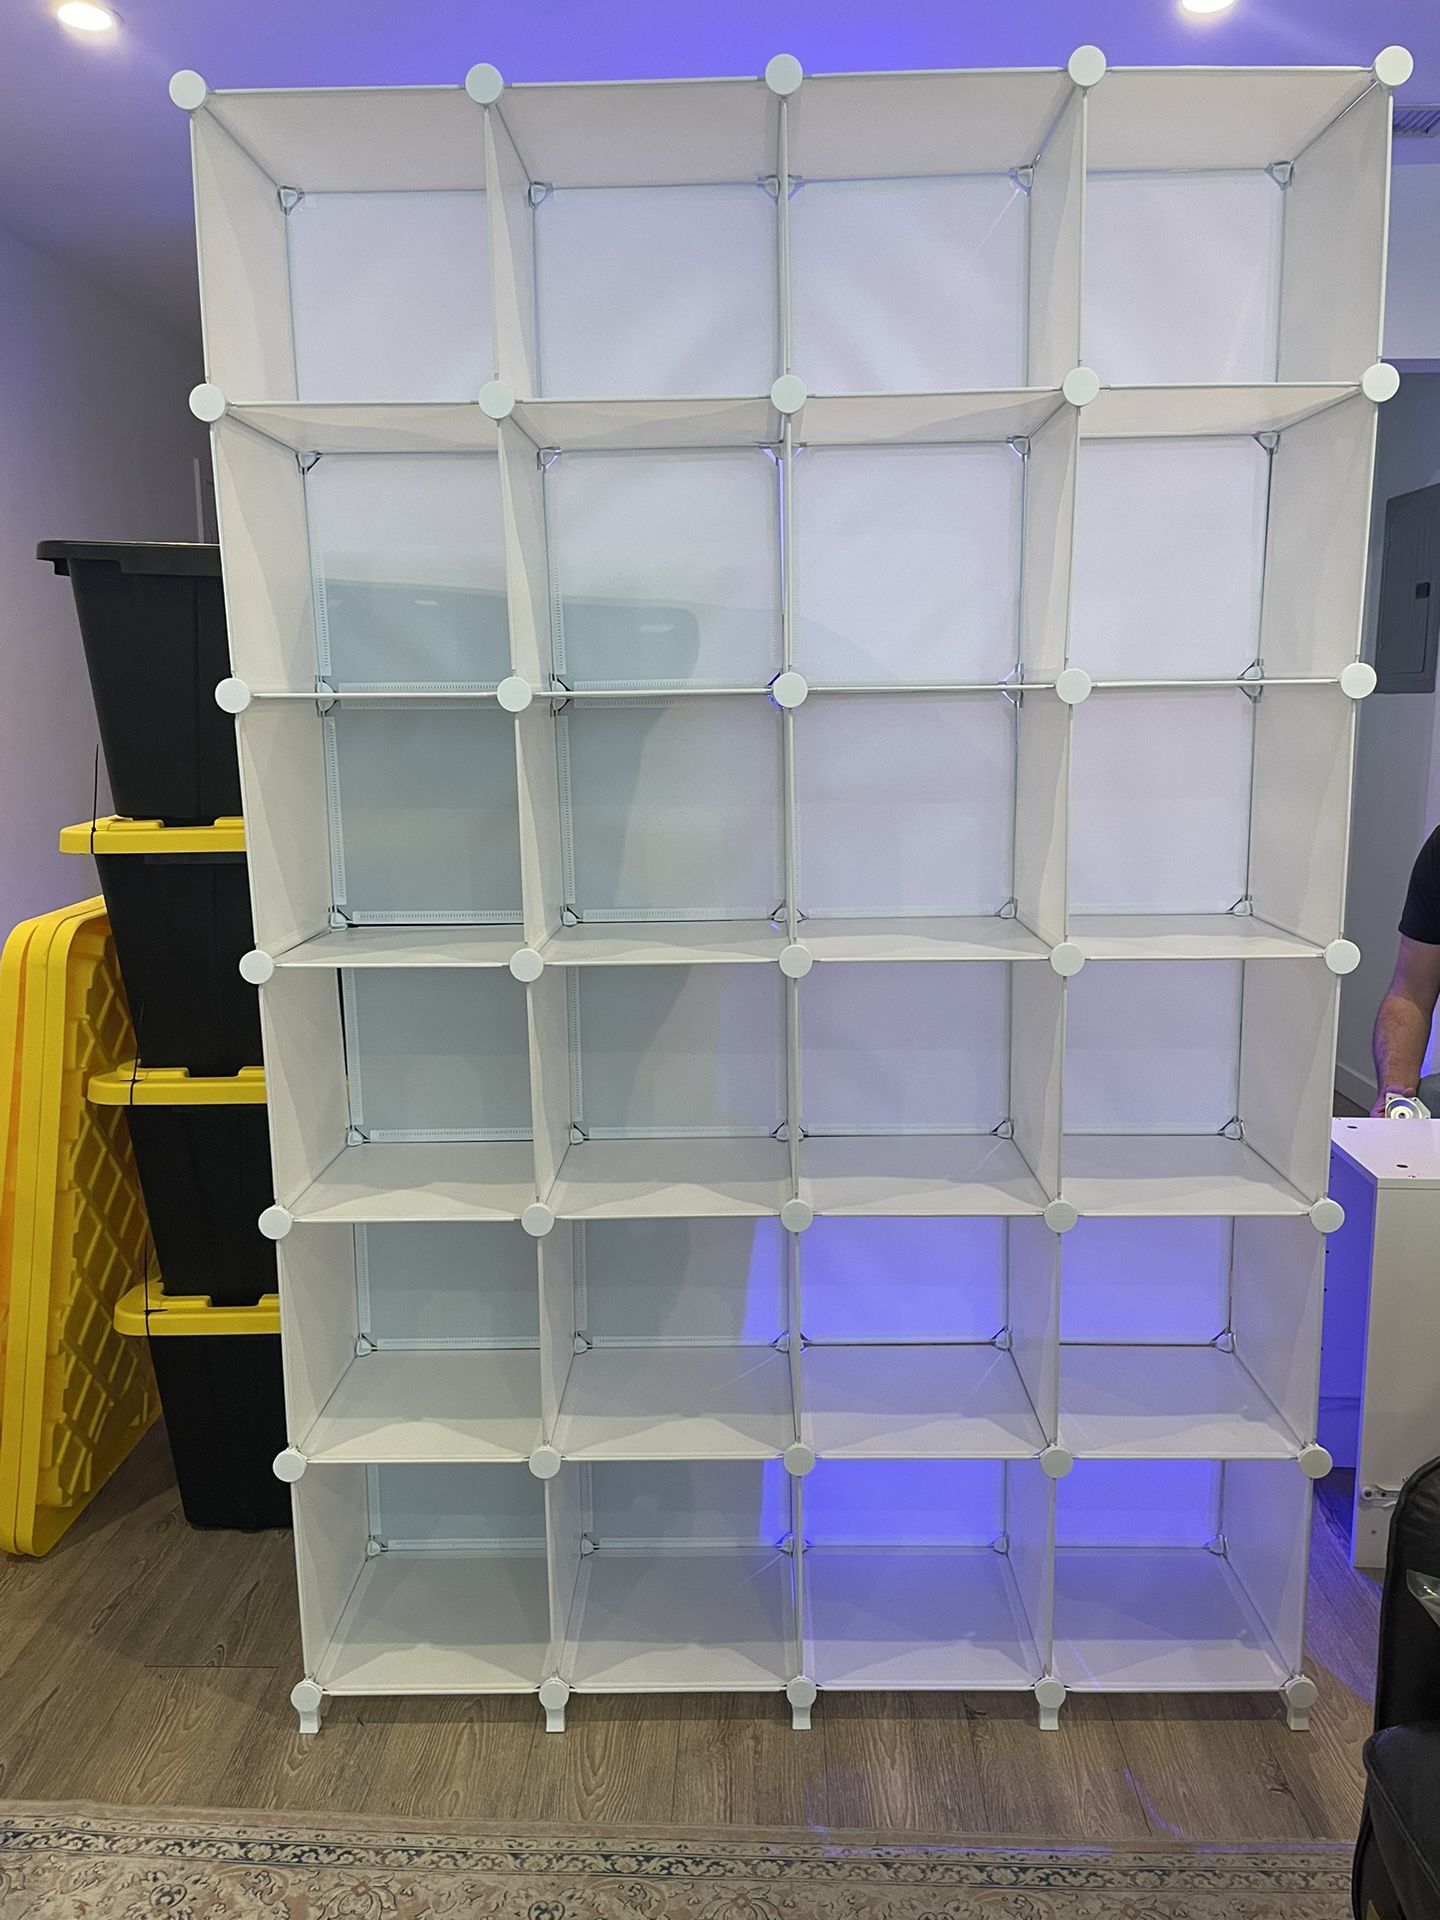 Storage cubes *Like New